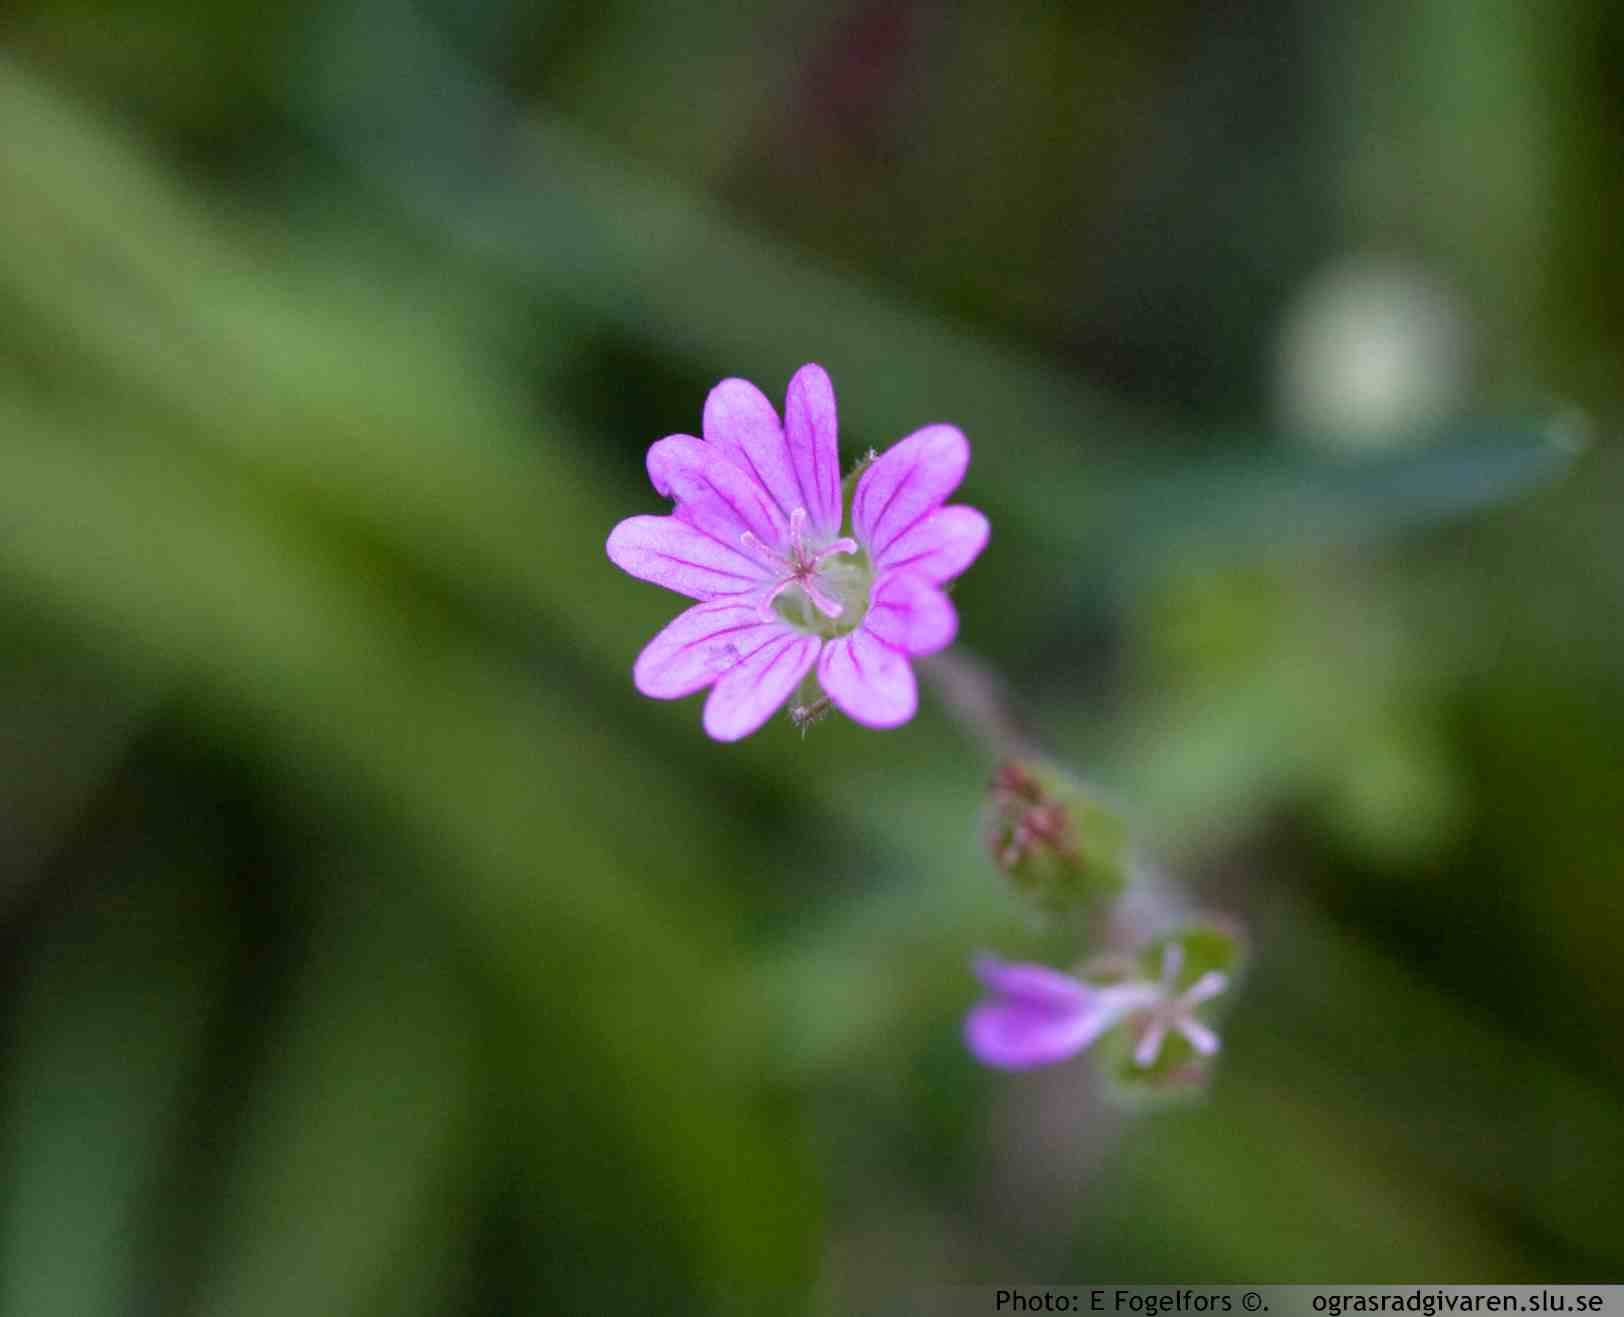 Blomma i närbild, kronblad 3-4 mm. något inskurna.